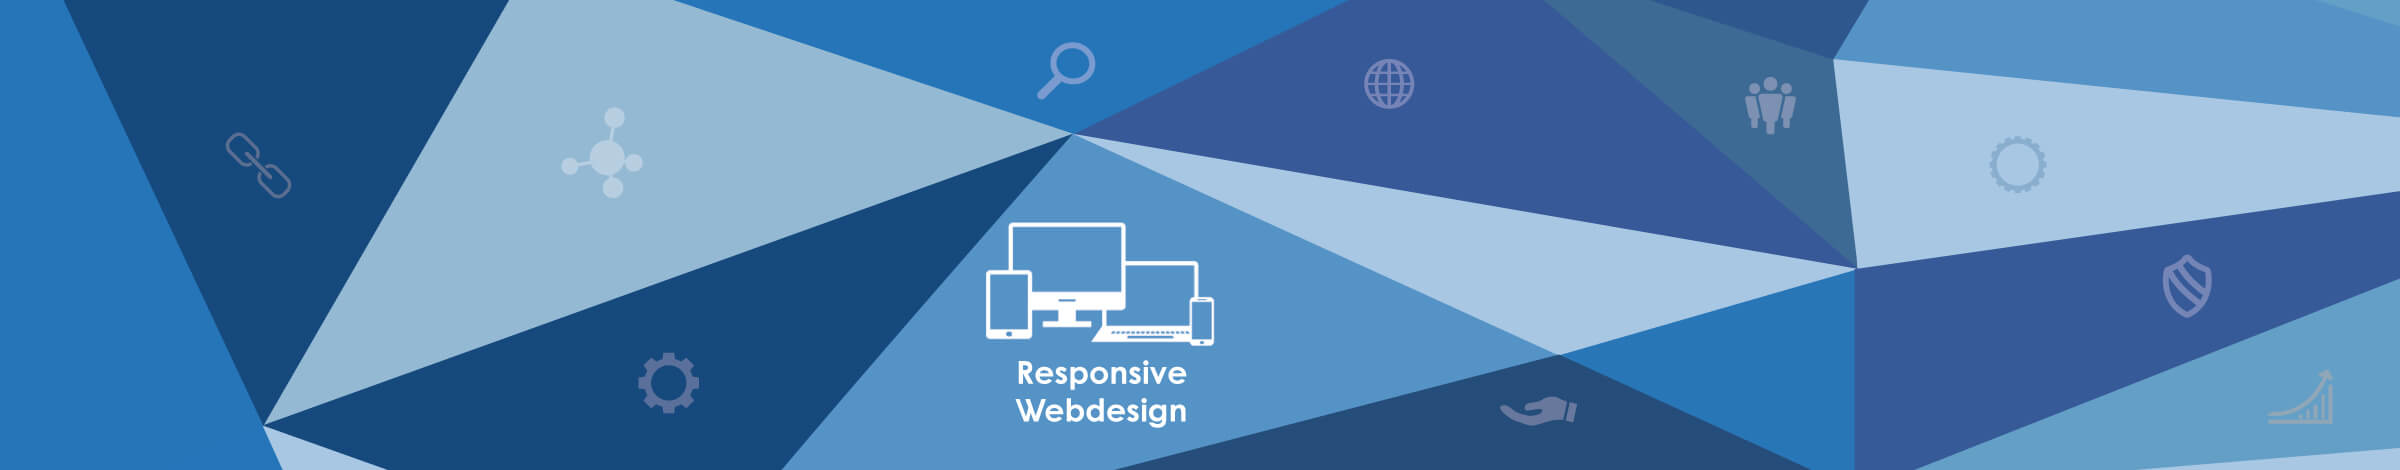 web updates kmu GmbH-wuk-WordPress und SEO Agentur -  Responsive-Webdesign